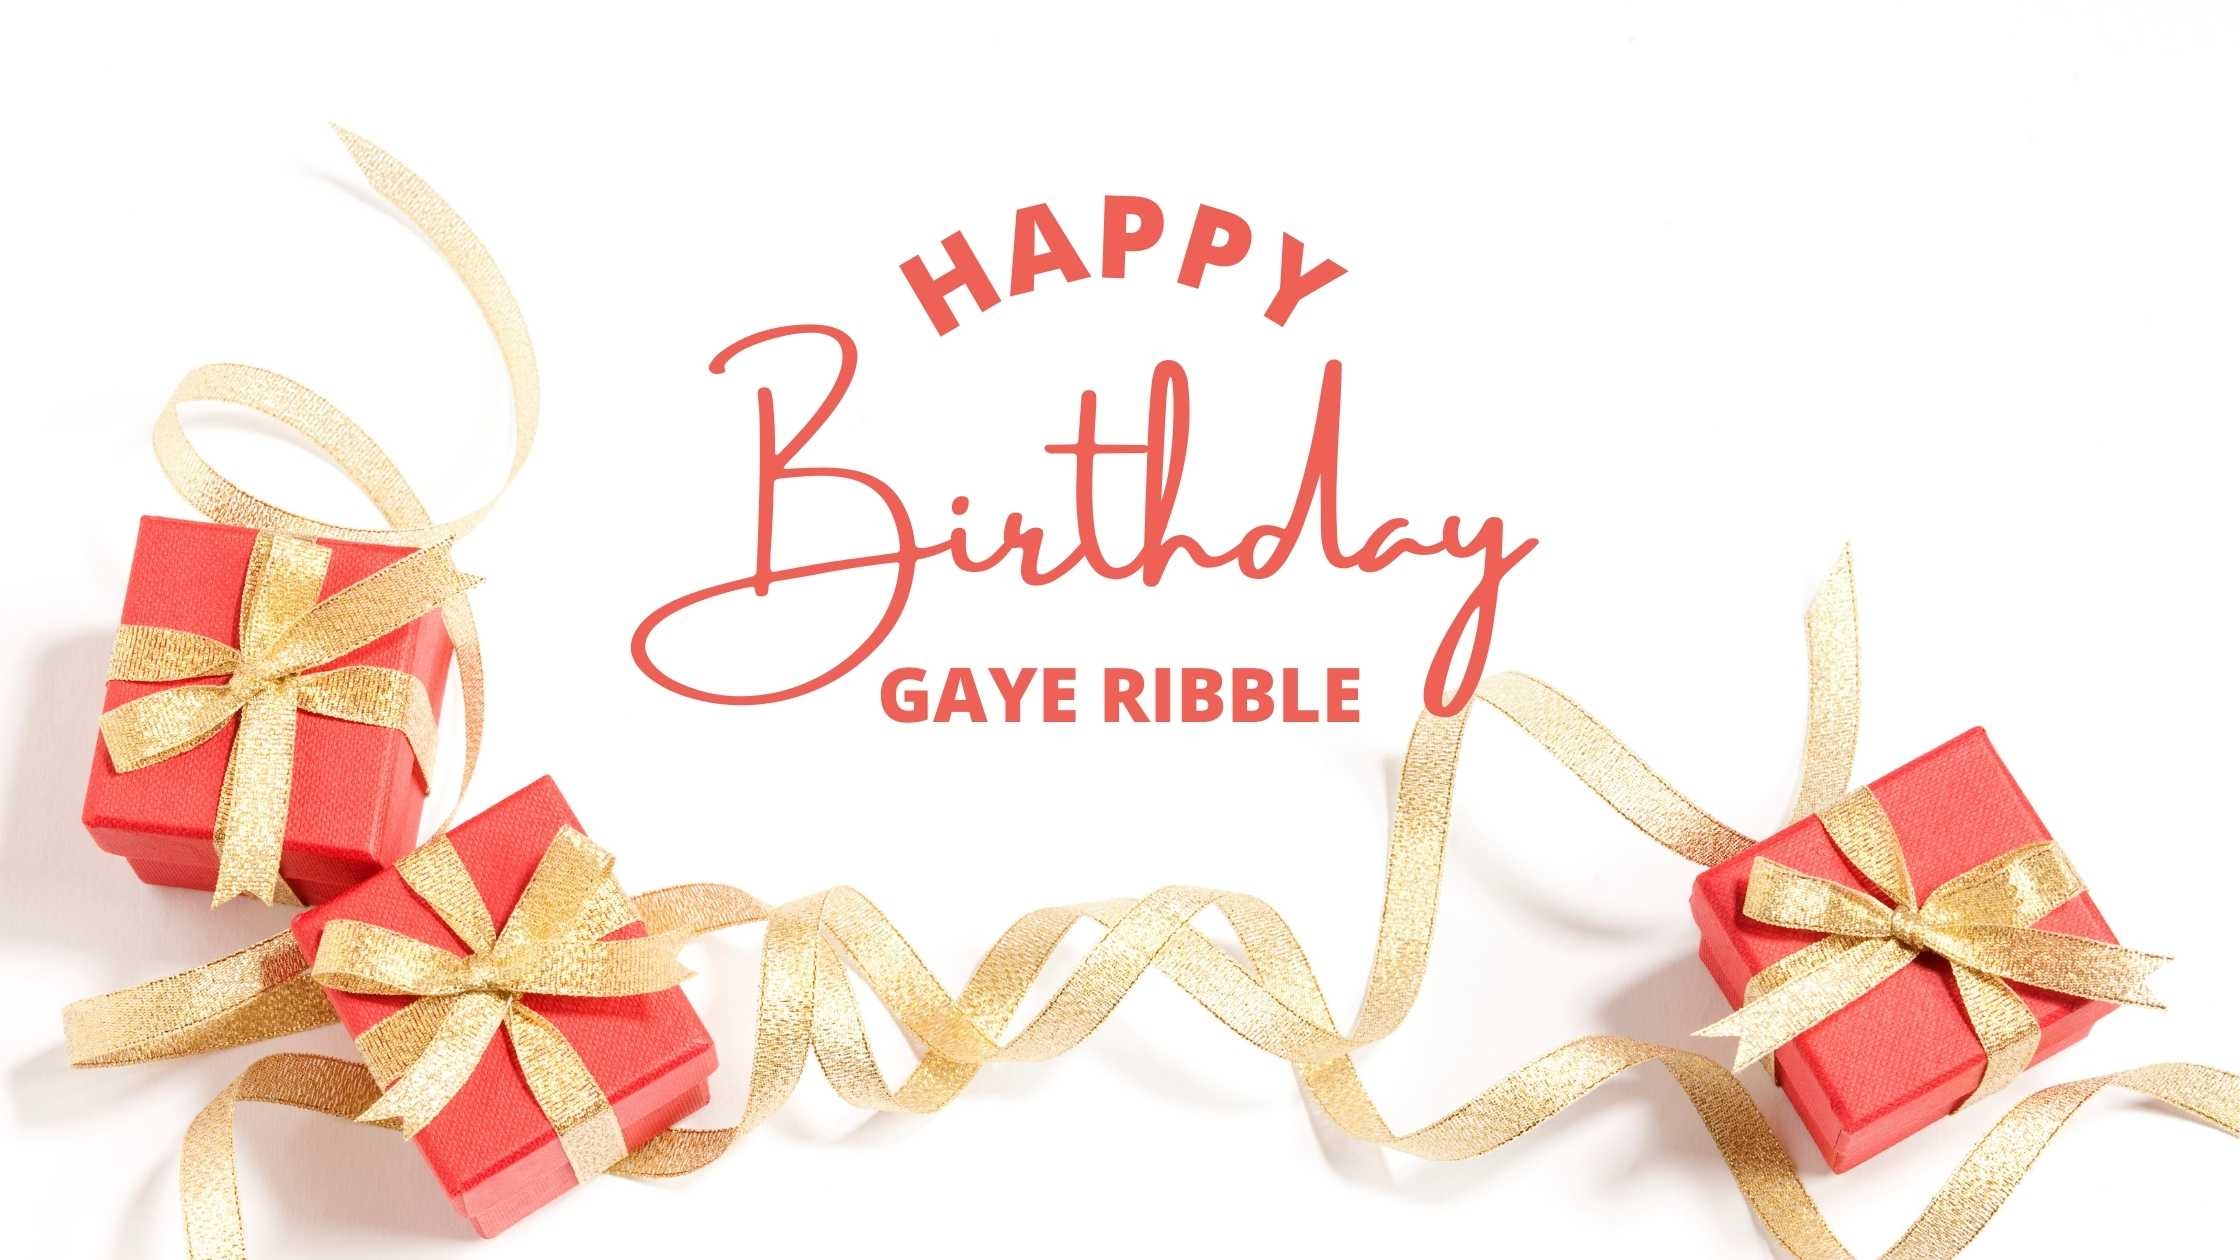 Happy Birthday to Team Leader, Gaye Ribble!